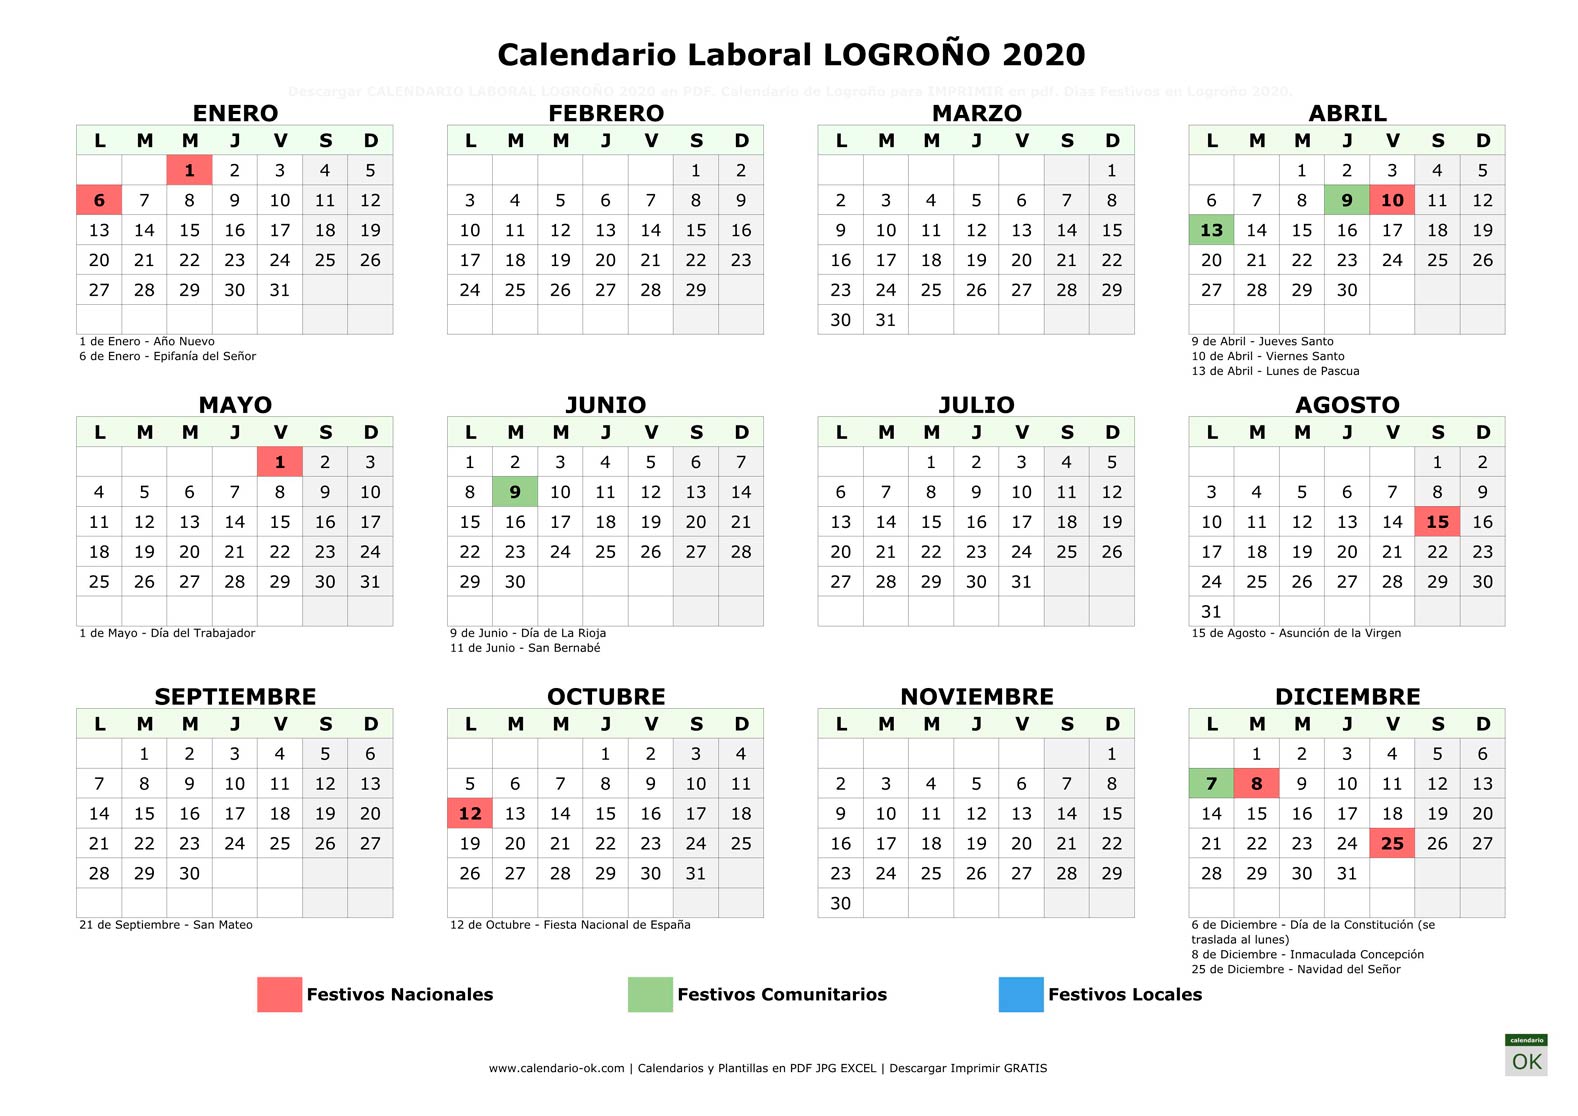 Calendario Laboral LOGROÑO 2020 horizontal